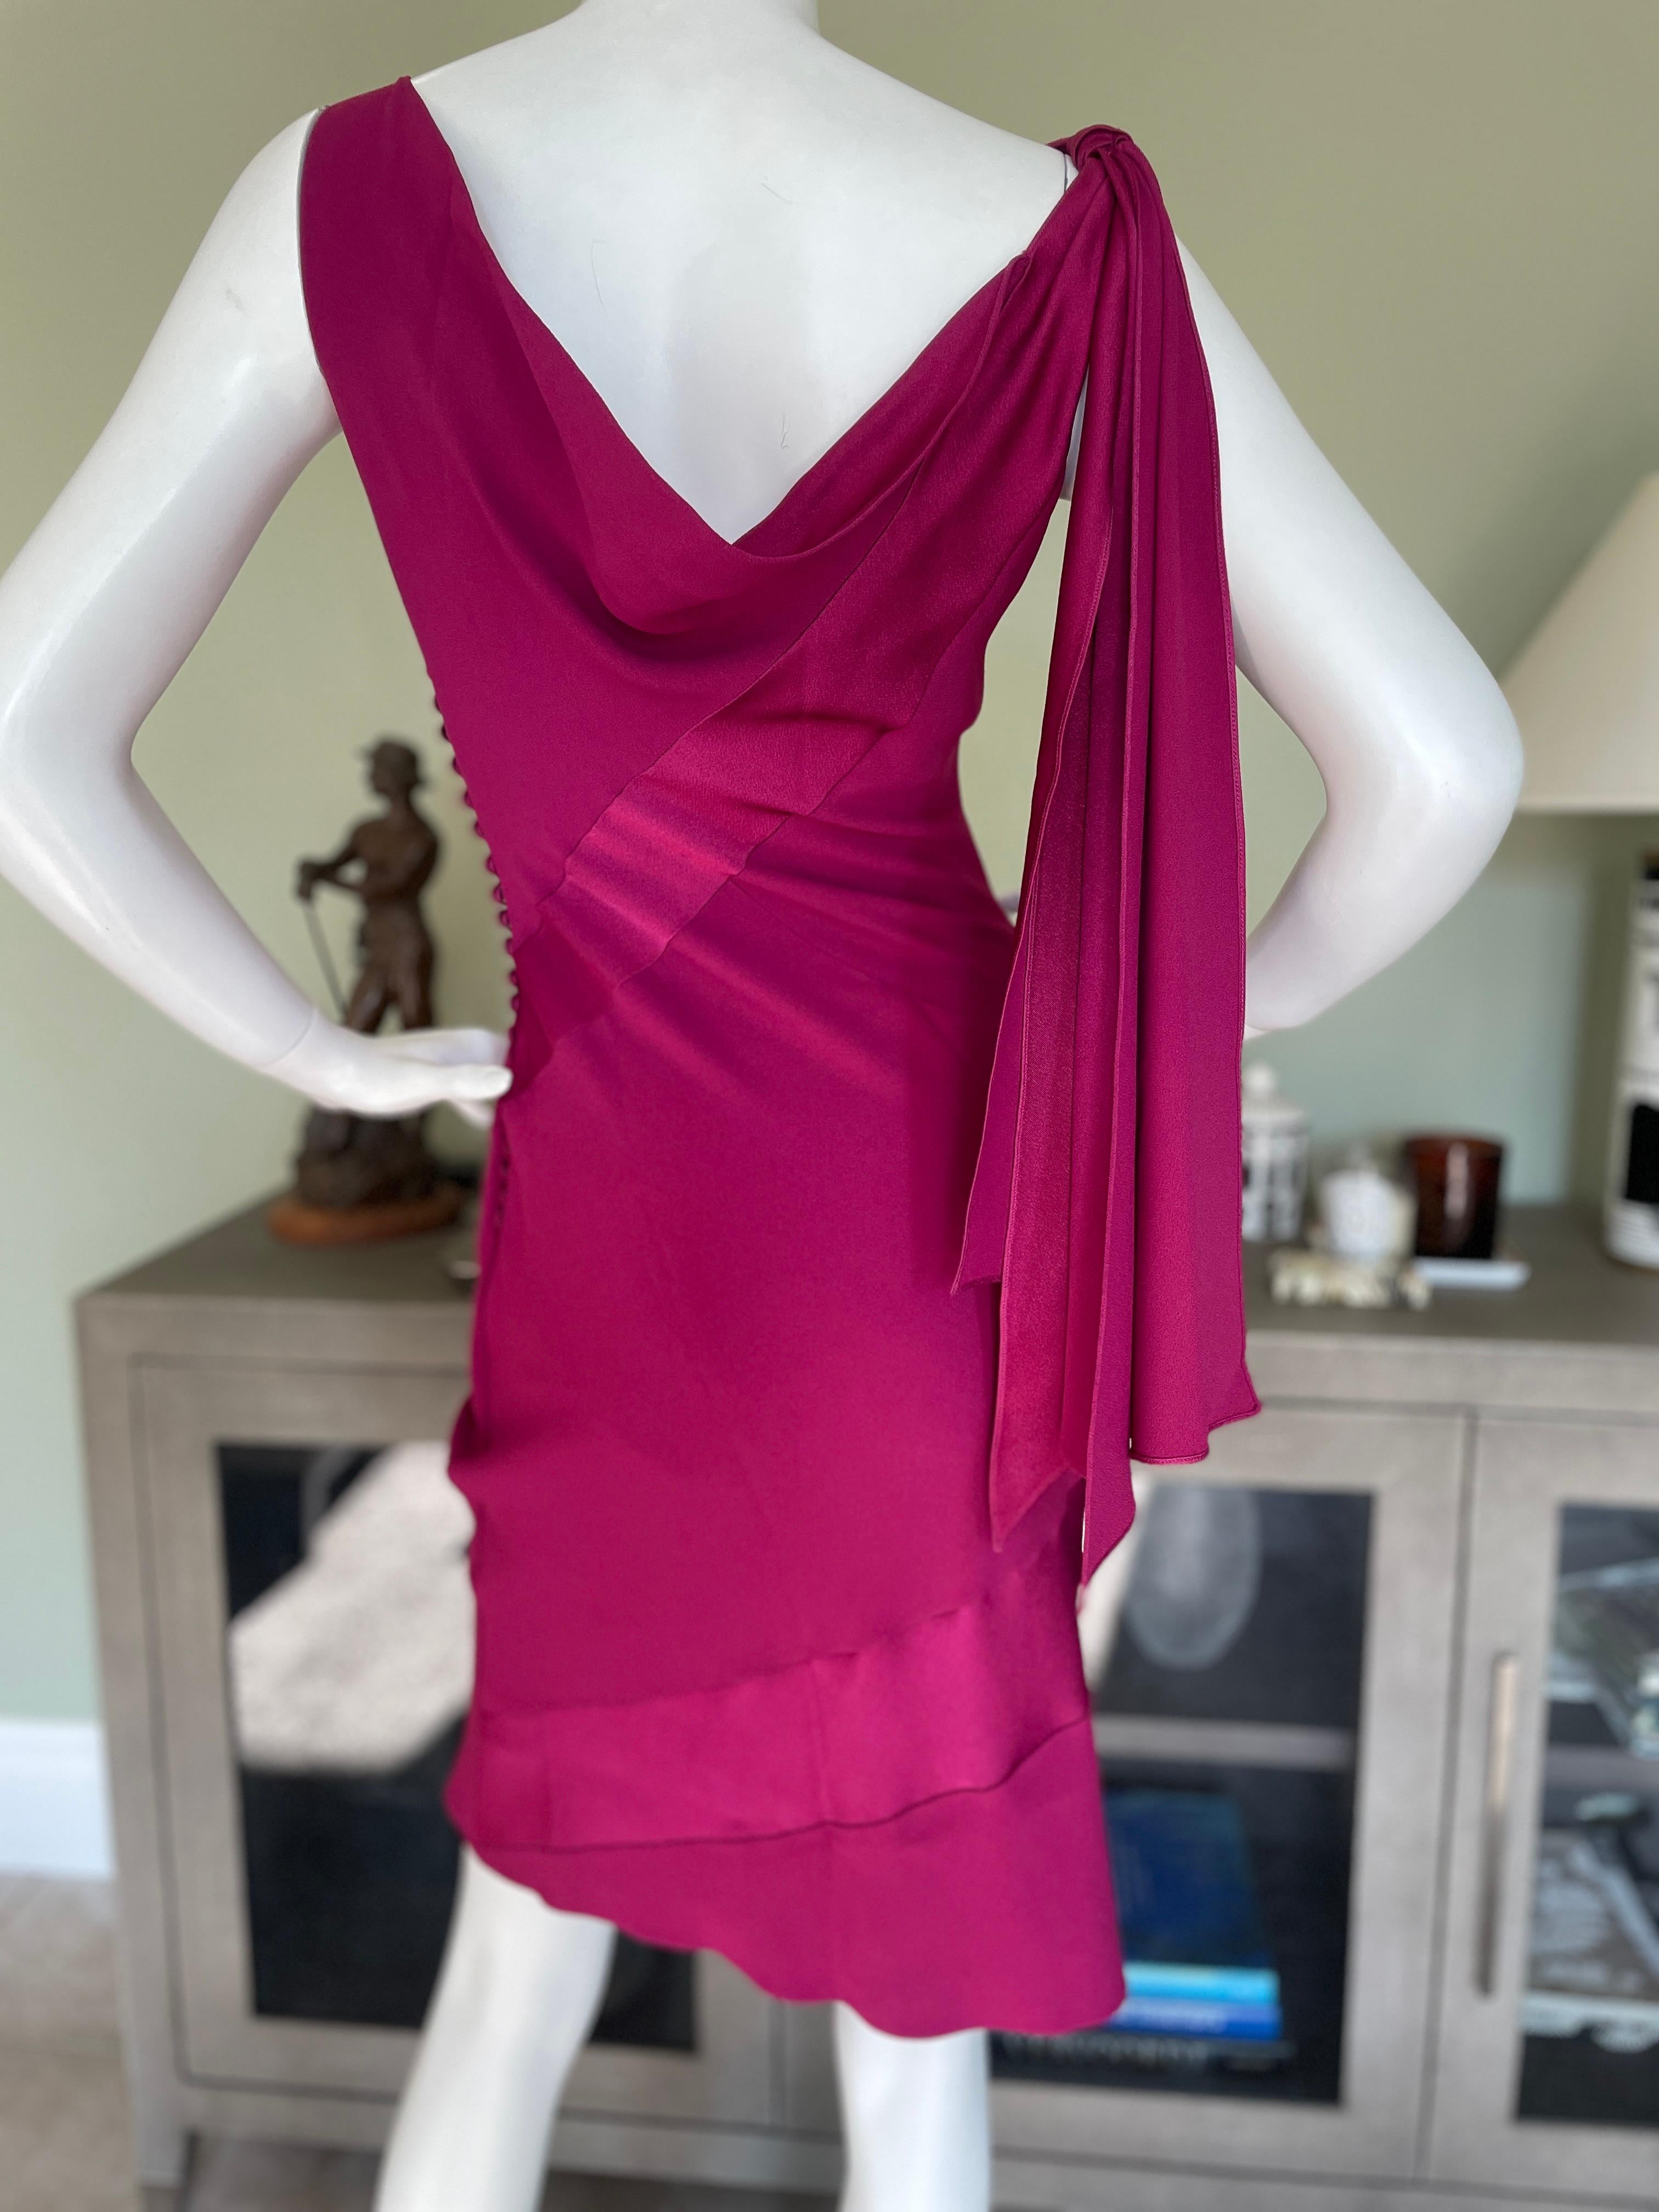  John Galliano Elegant Vintage 2004 Bias Cut Pink Evening Dress  For Sale 3